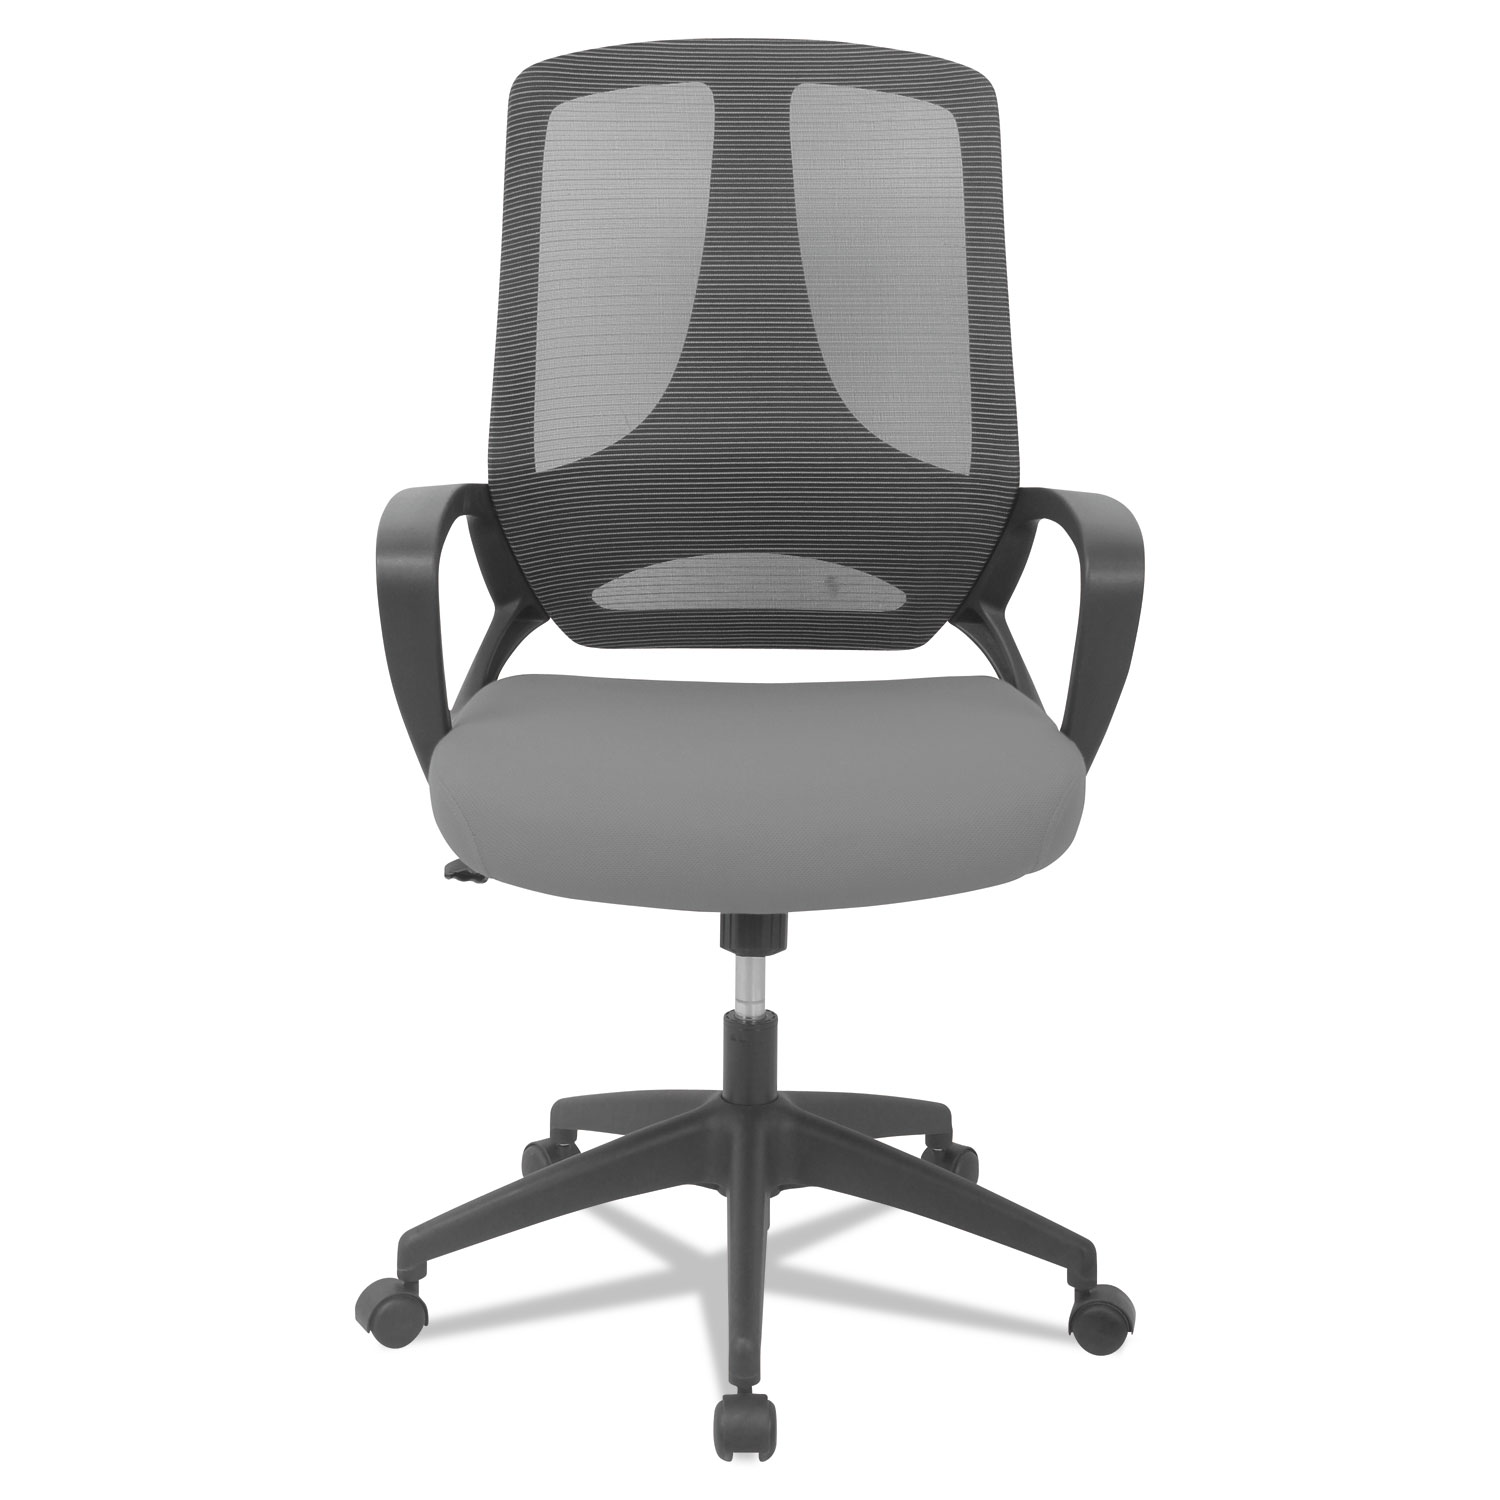 MB Series Mesh Mid-Back Office Chair, Gray/Black